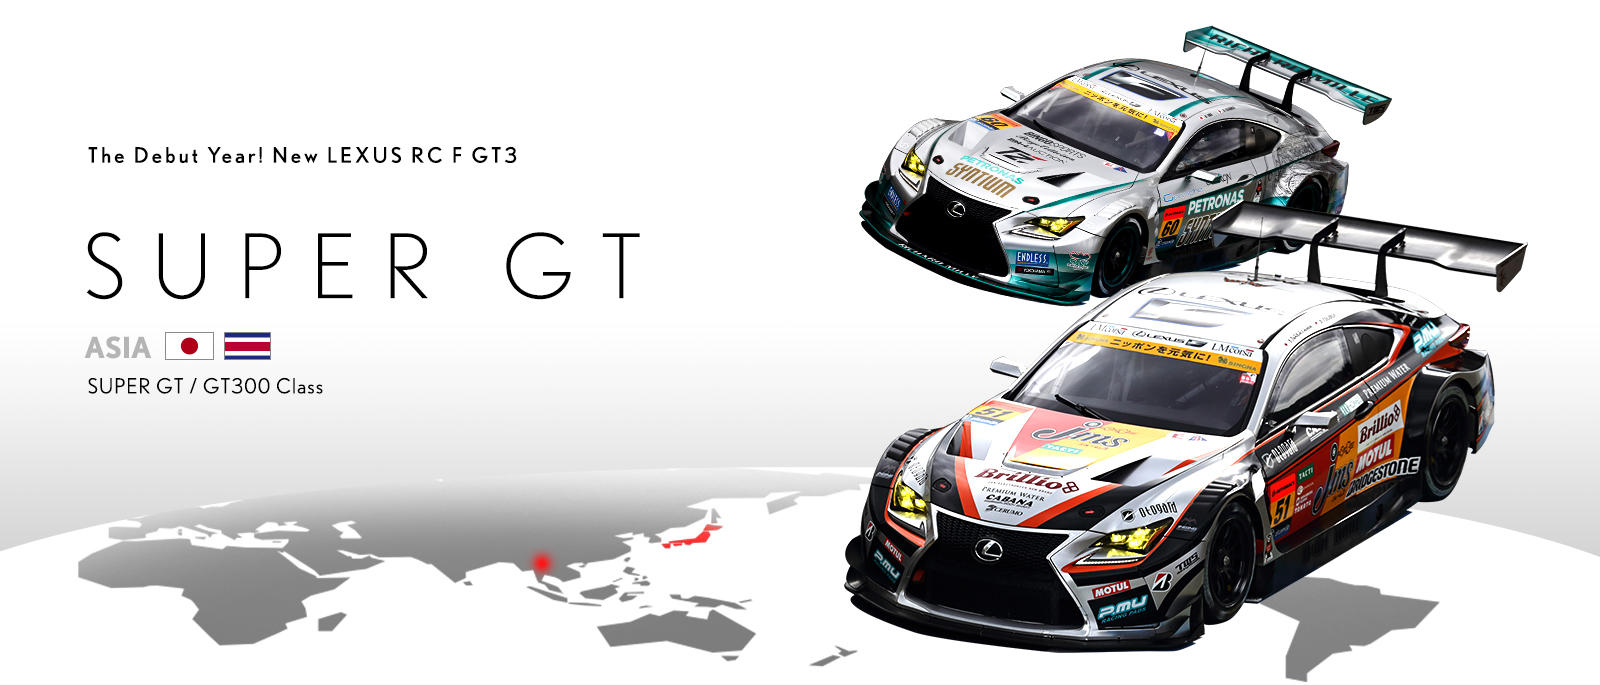 SUPER GT（GT300 Class） 〜激戦のシリーズで2勝を挙げる 手応えありのランキング3位〜 | The Debut Year! New LEXUS RC F GT3